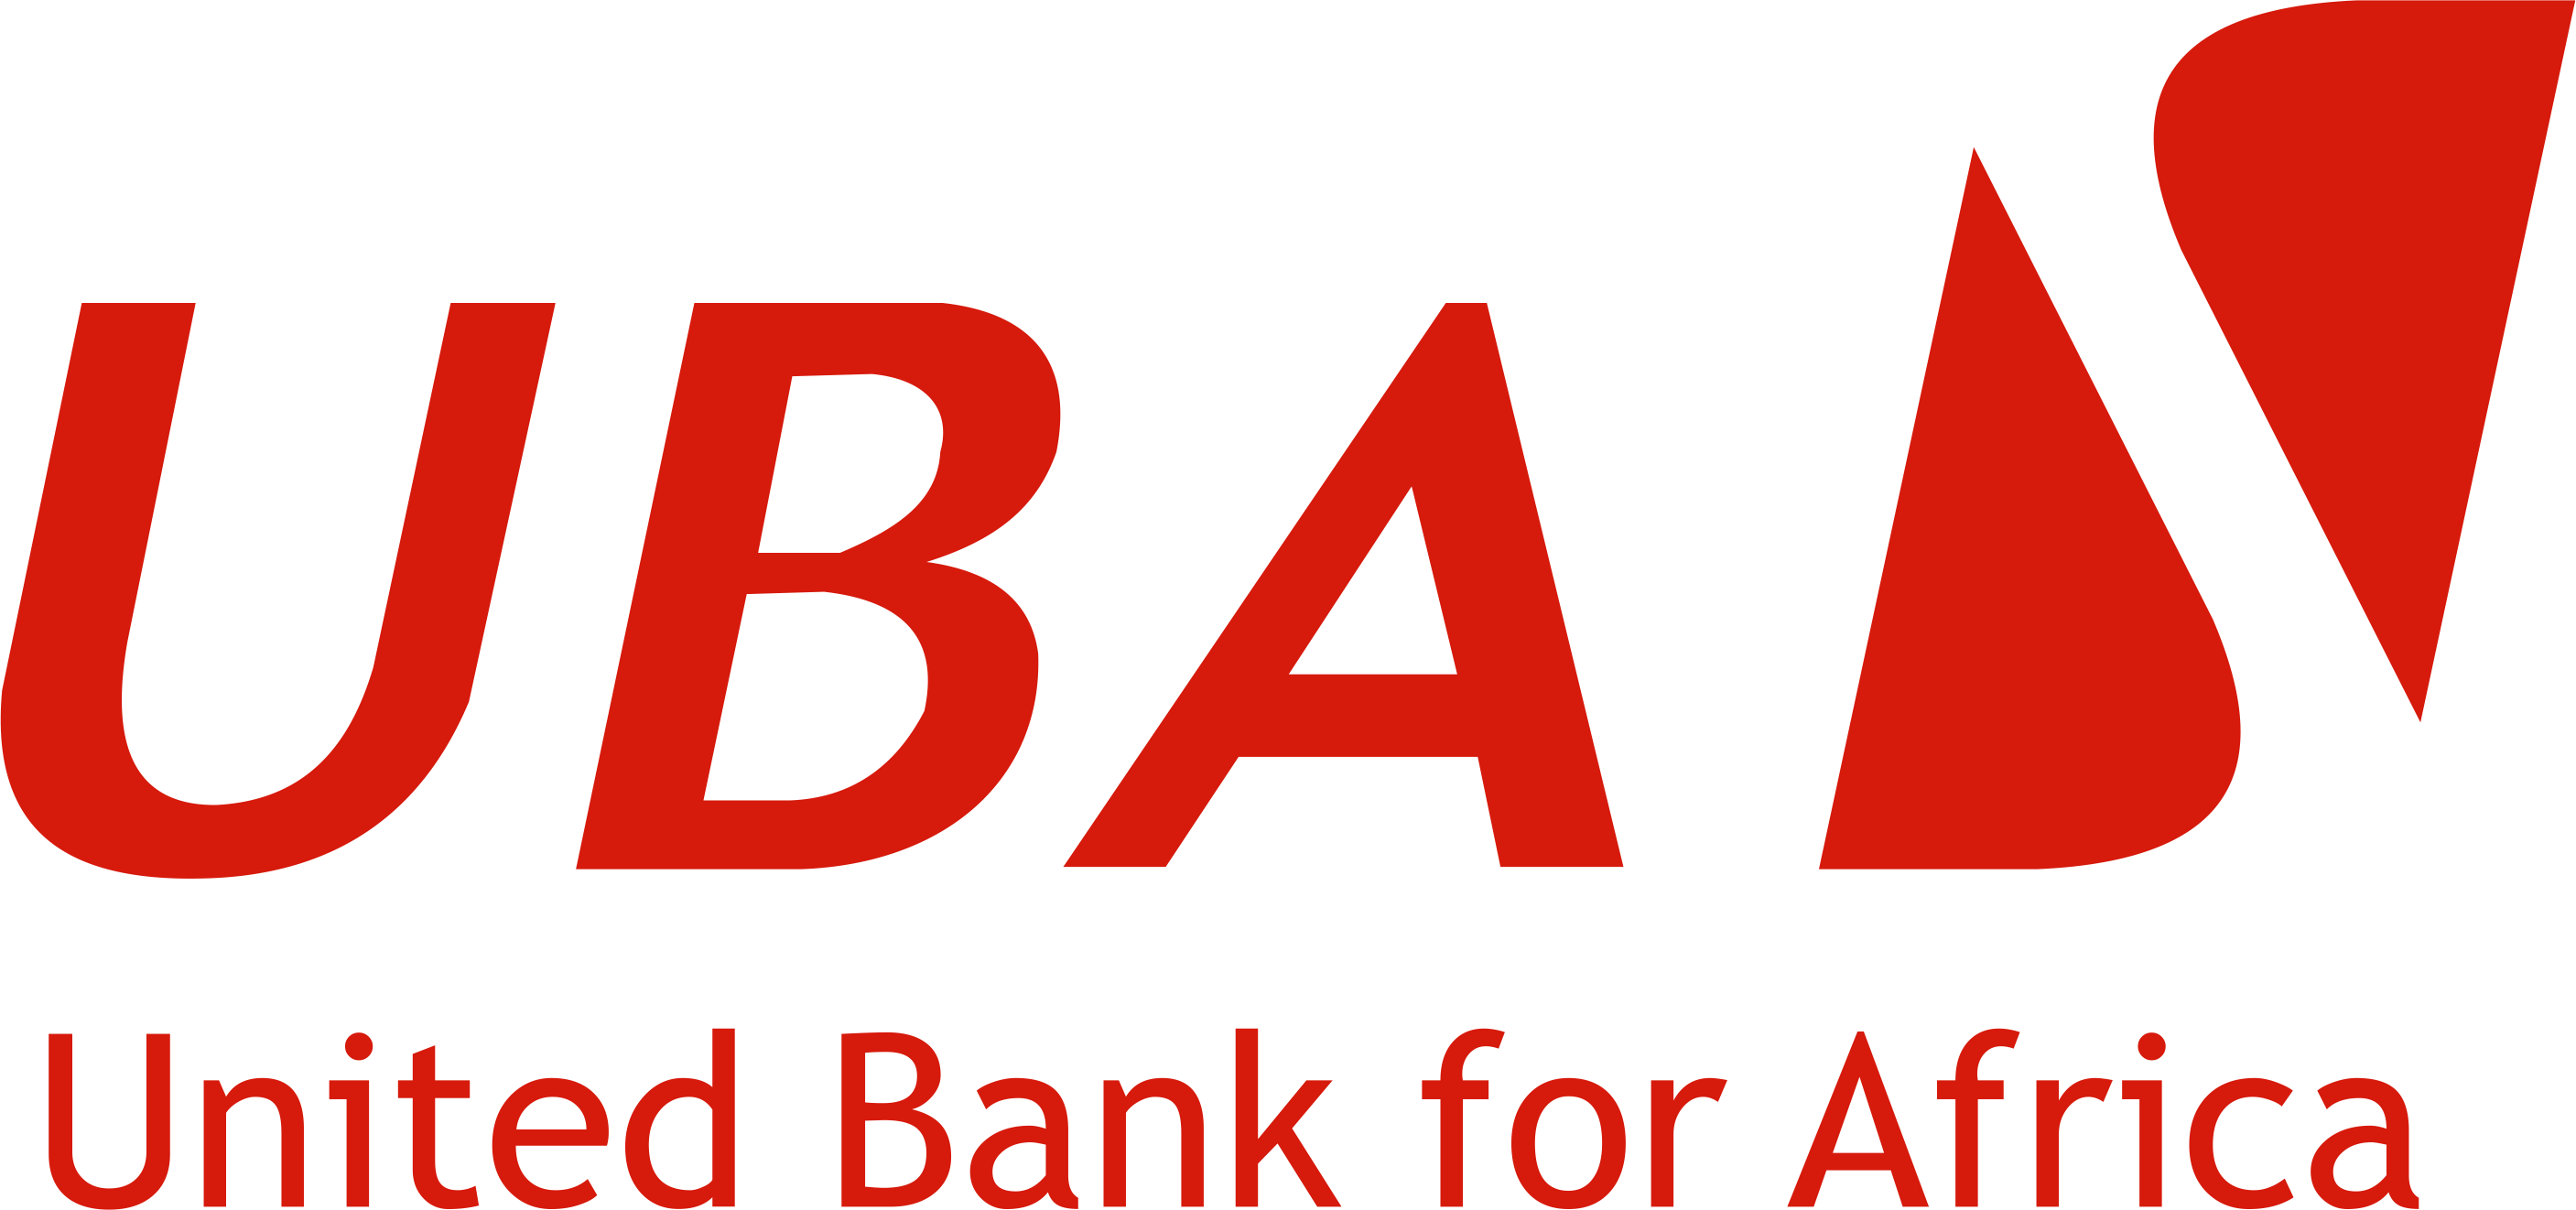 United Bank for Africa Brand Logo